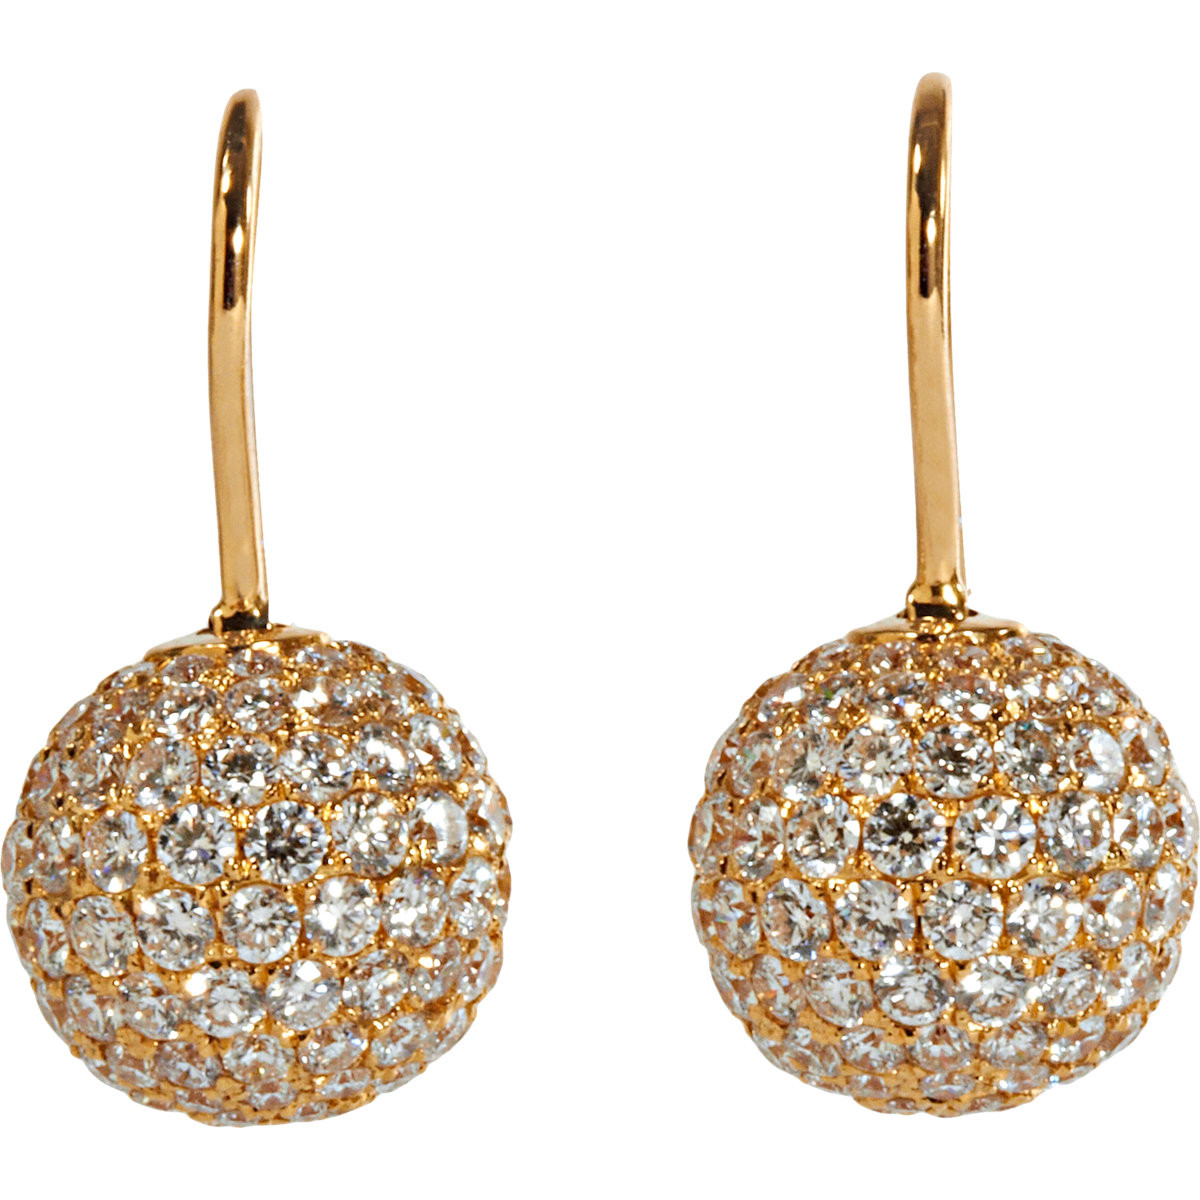 Diamond Ball Earrings
 Shamballa Jewels Pave Diamond Gold Ball Drop Earrings in